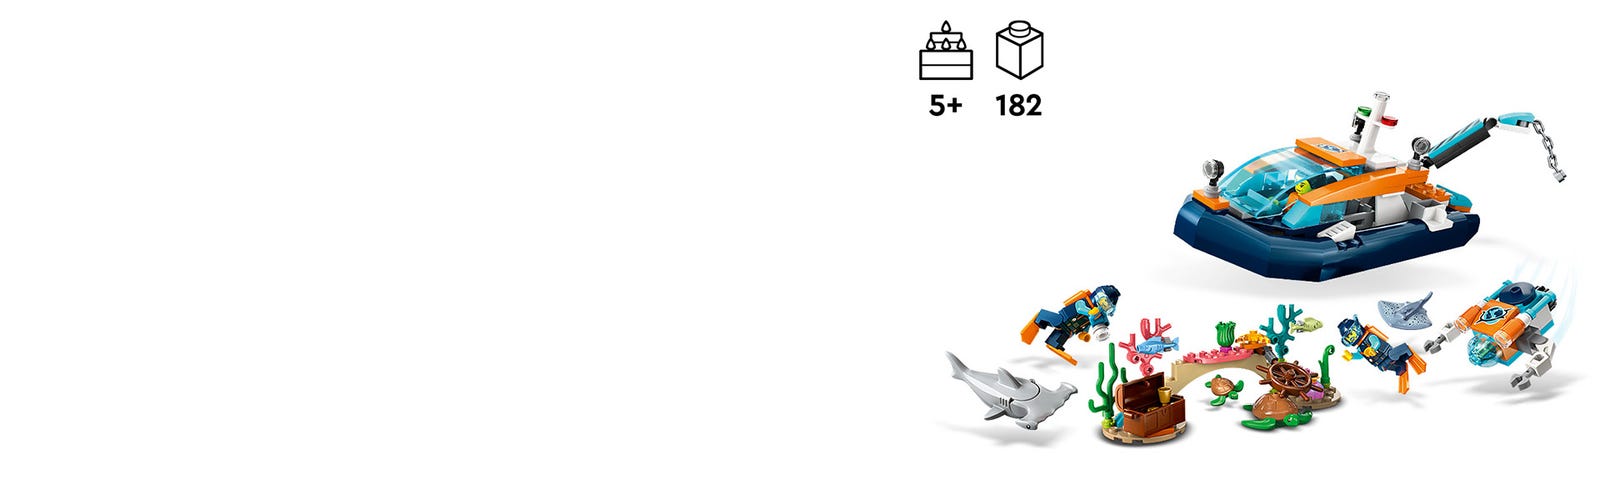 LEGO City - Bateau Exploration Sous-Marine - 60377 - Dès 5 ans - Super U,  Hyper U, U Express 